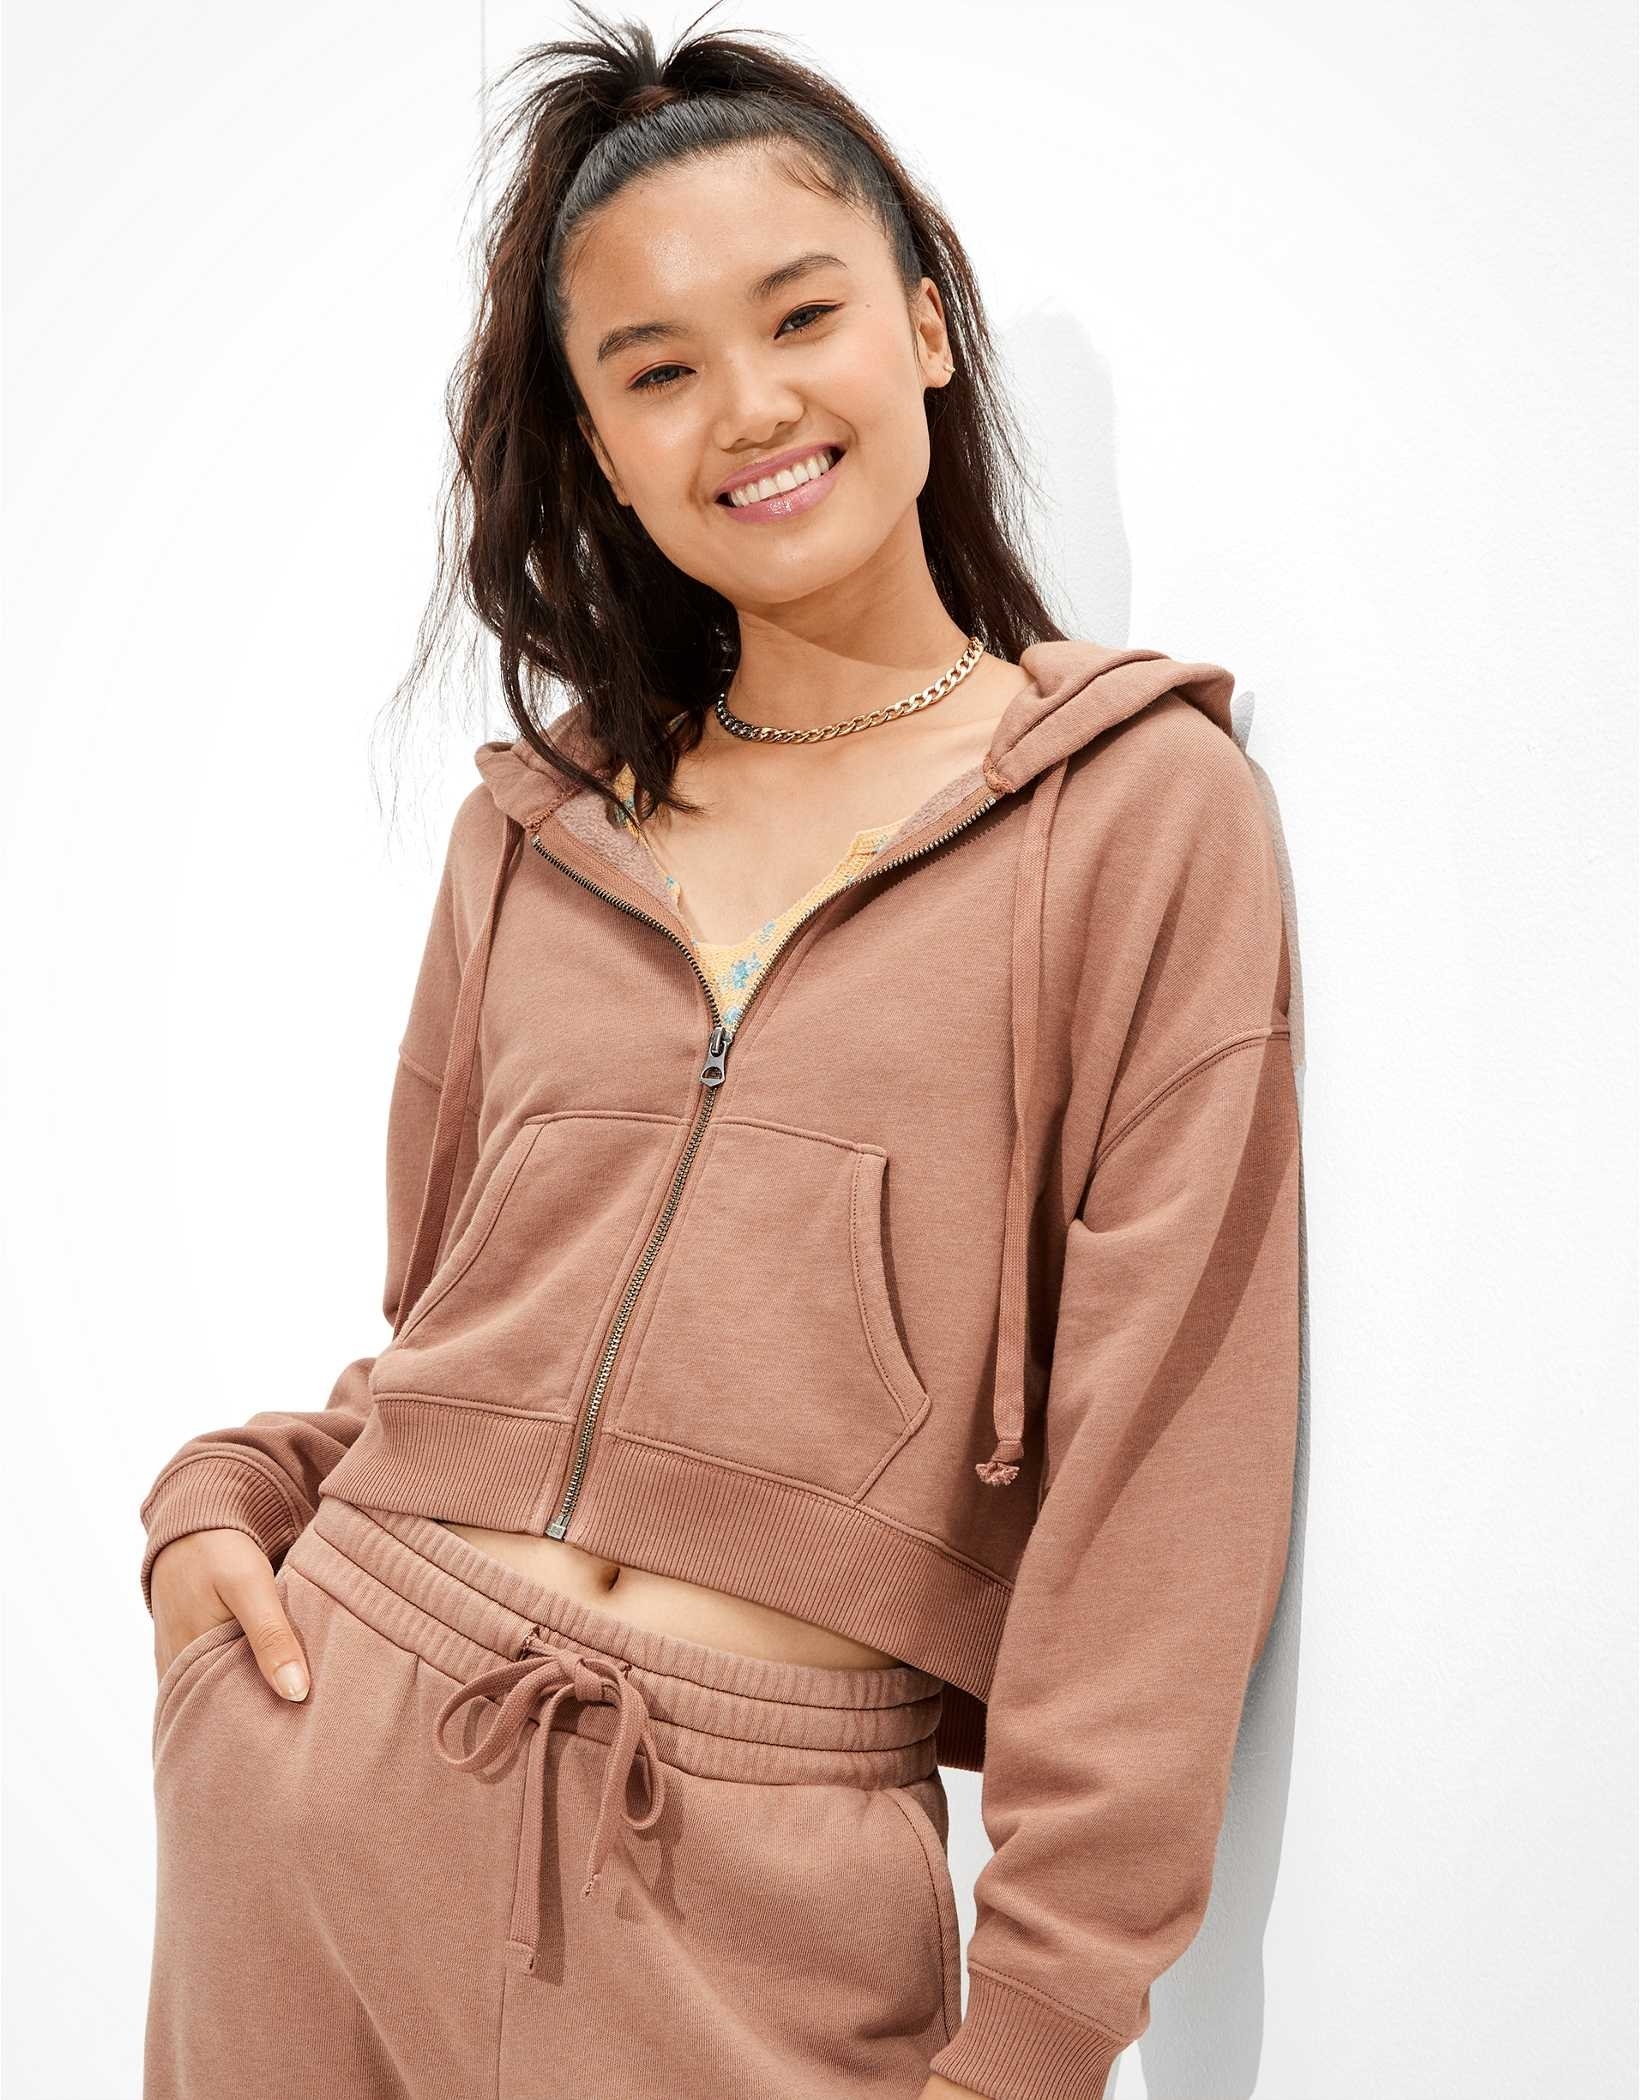 A model wearing a brown cropped zip up hoodie